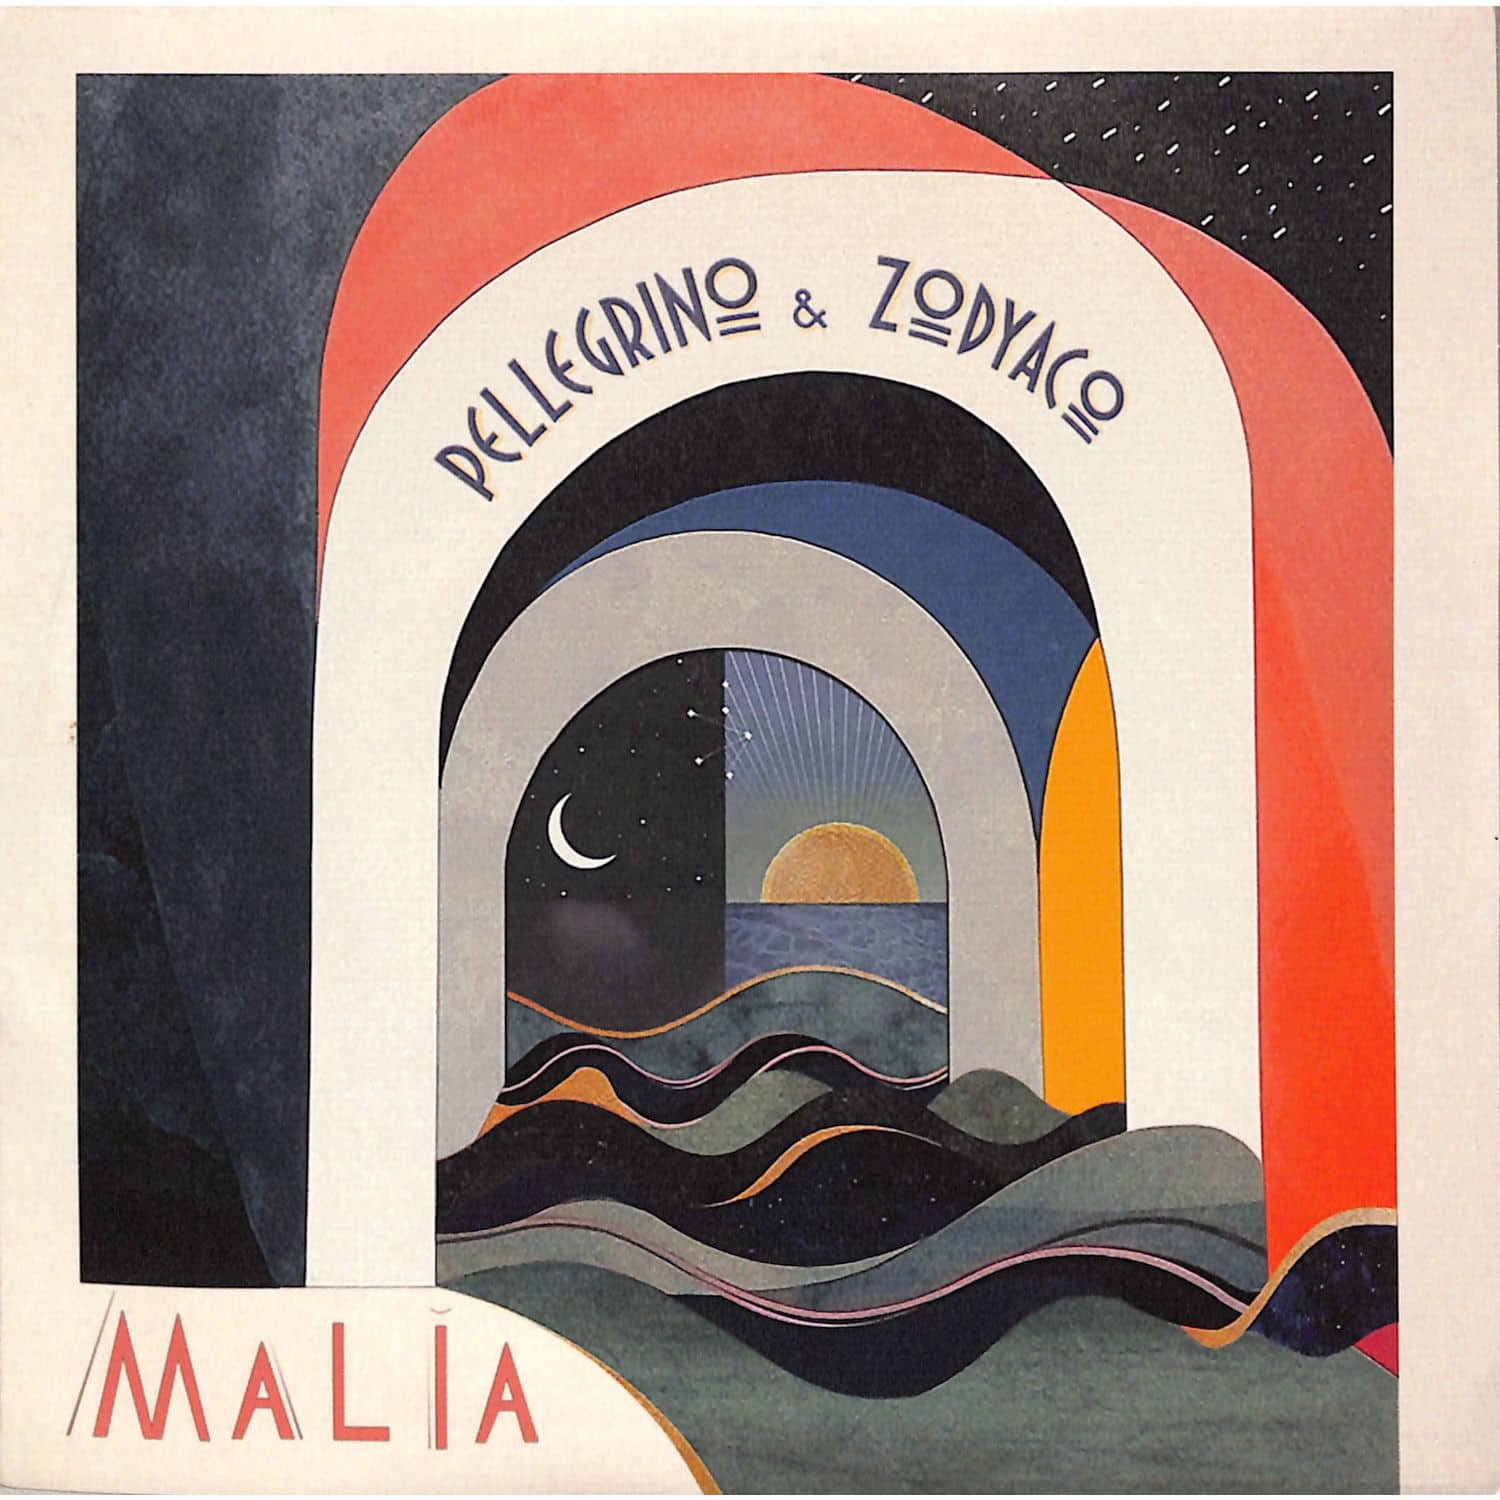 Pellegrino & Zodyaco - MALIA 